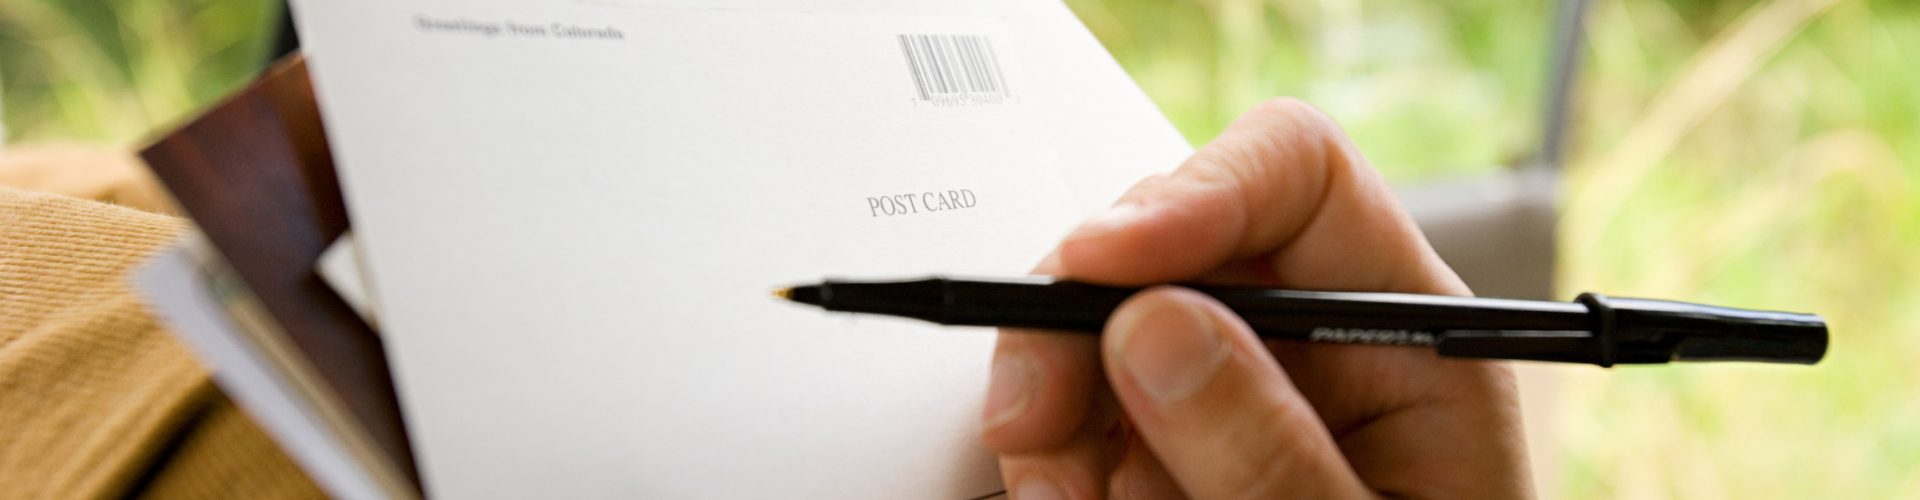 a hand preparing materials for postcard marketing